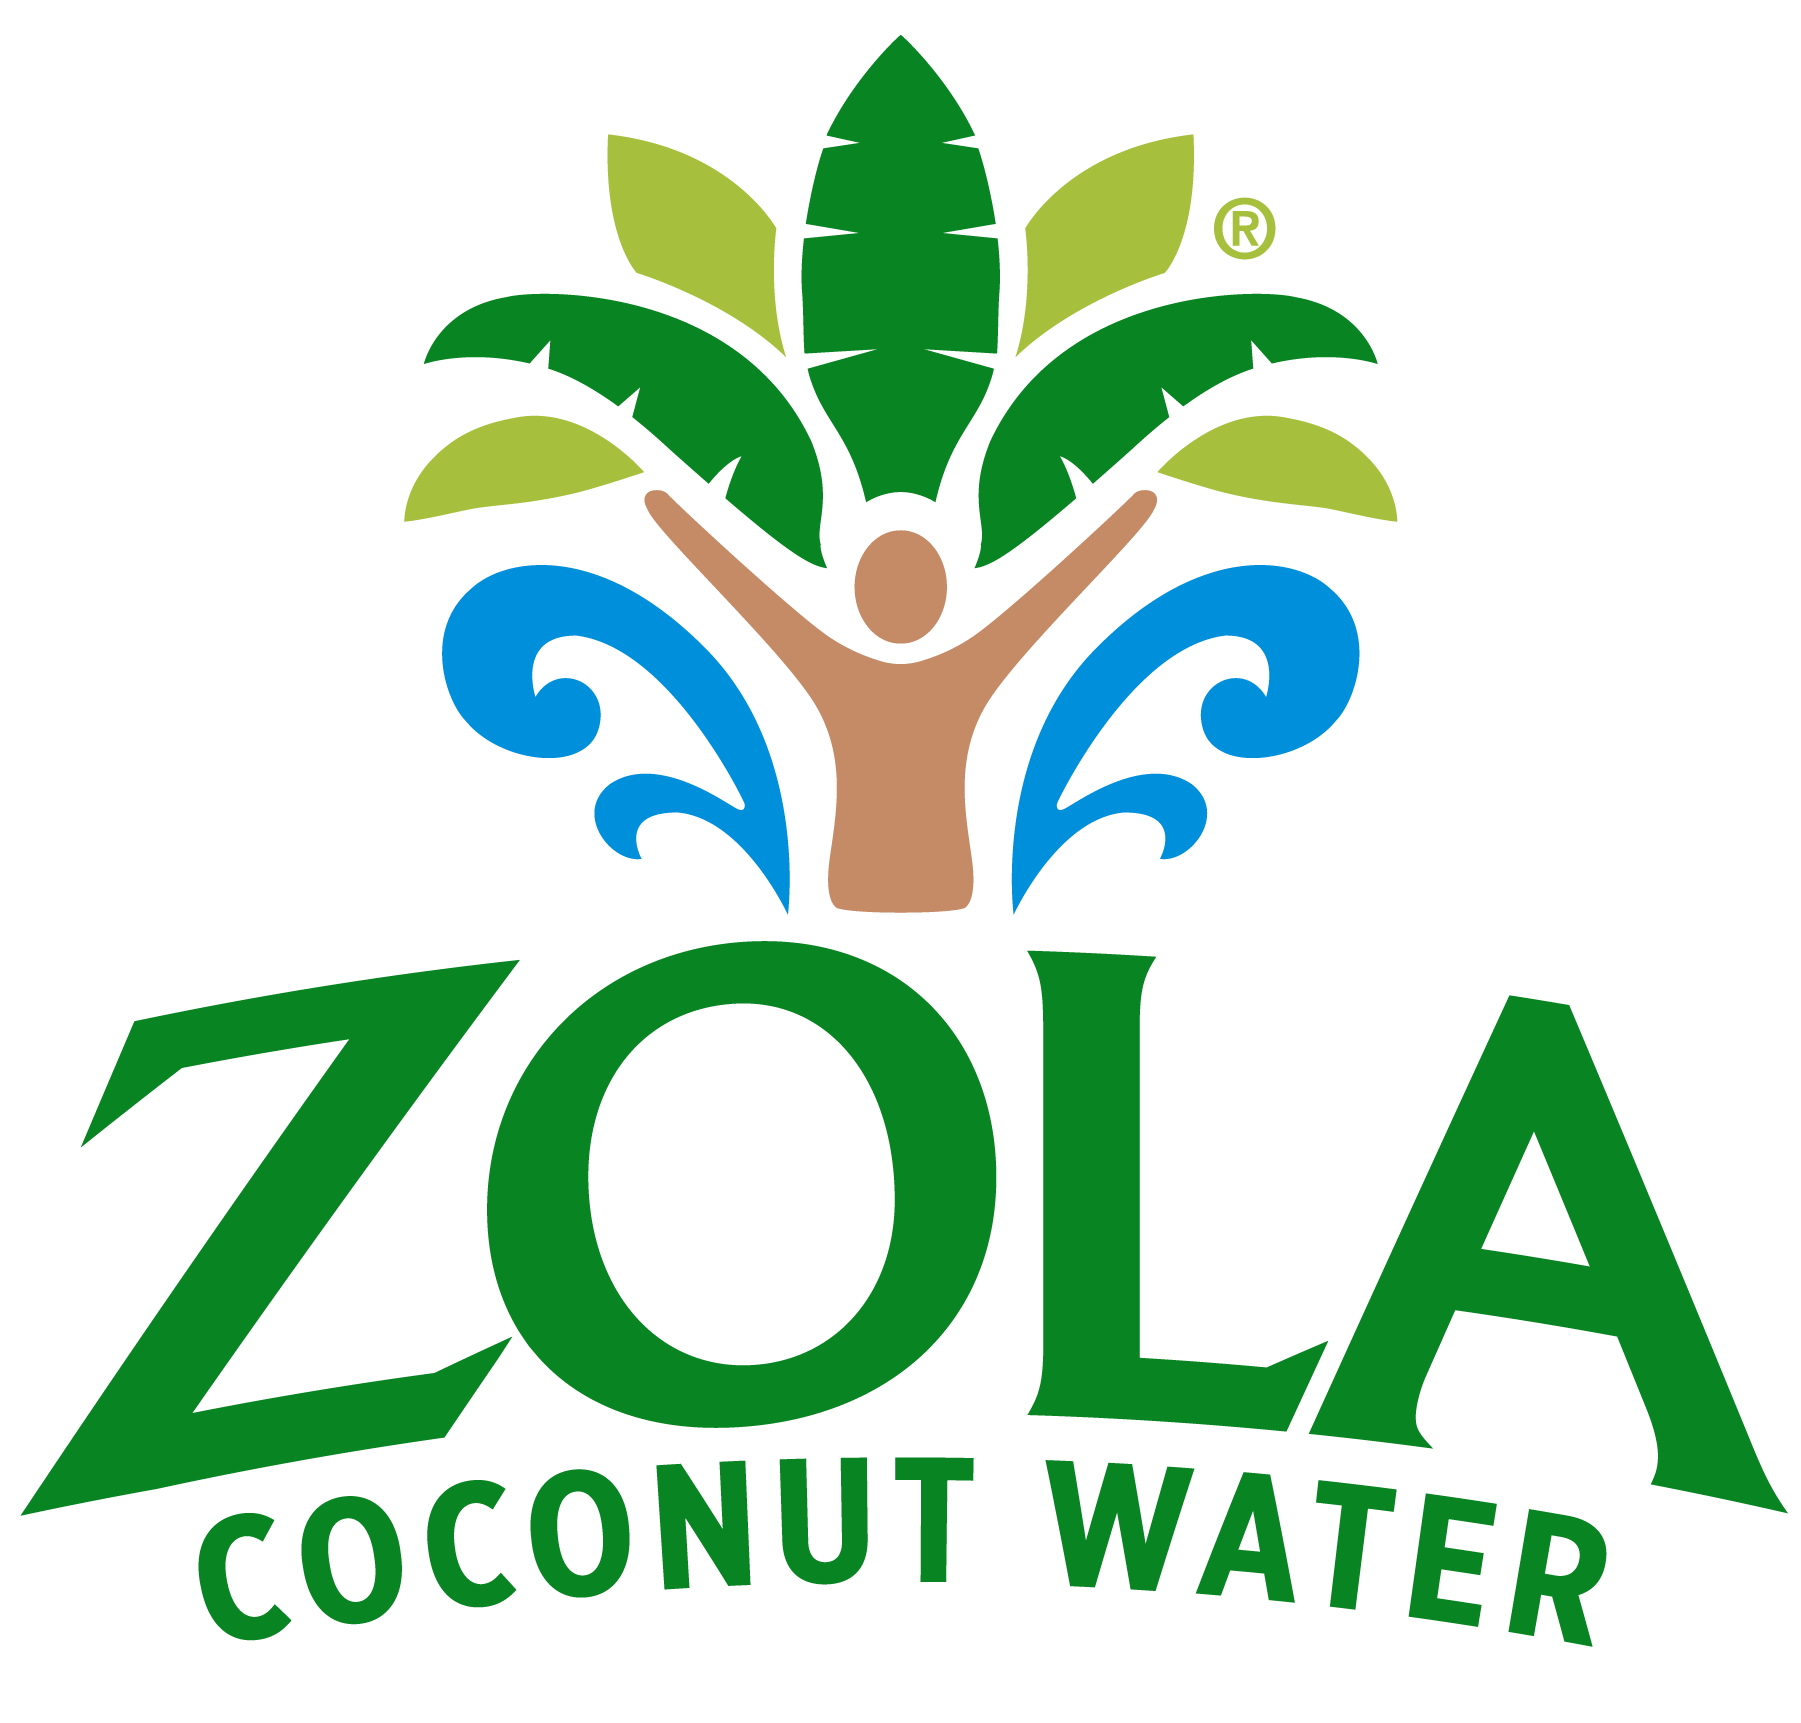 Zola Coconut Water